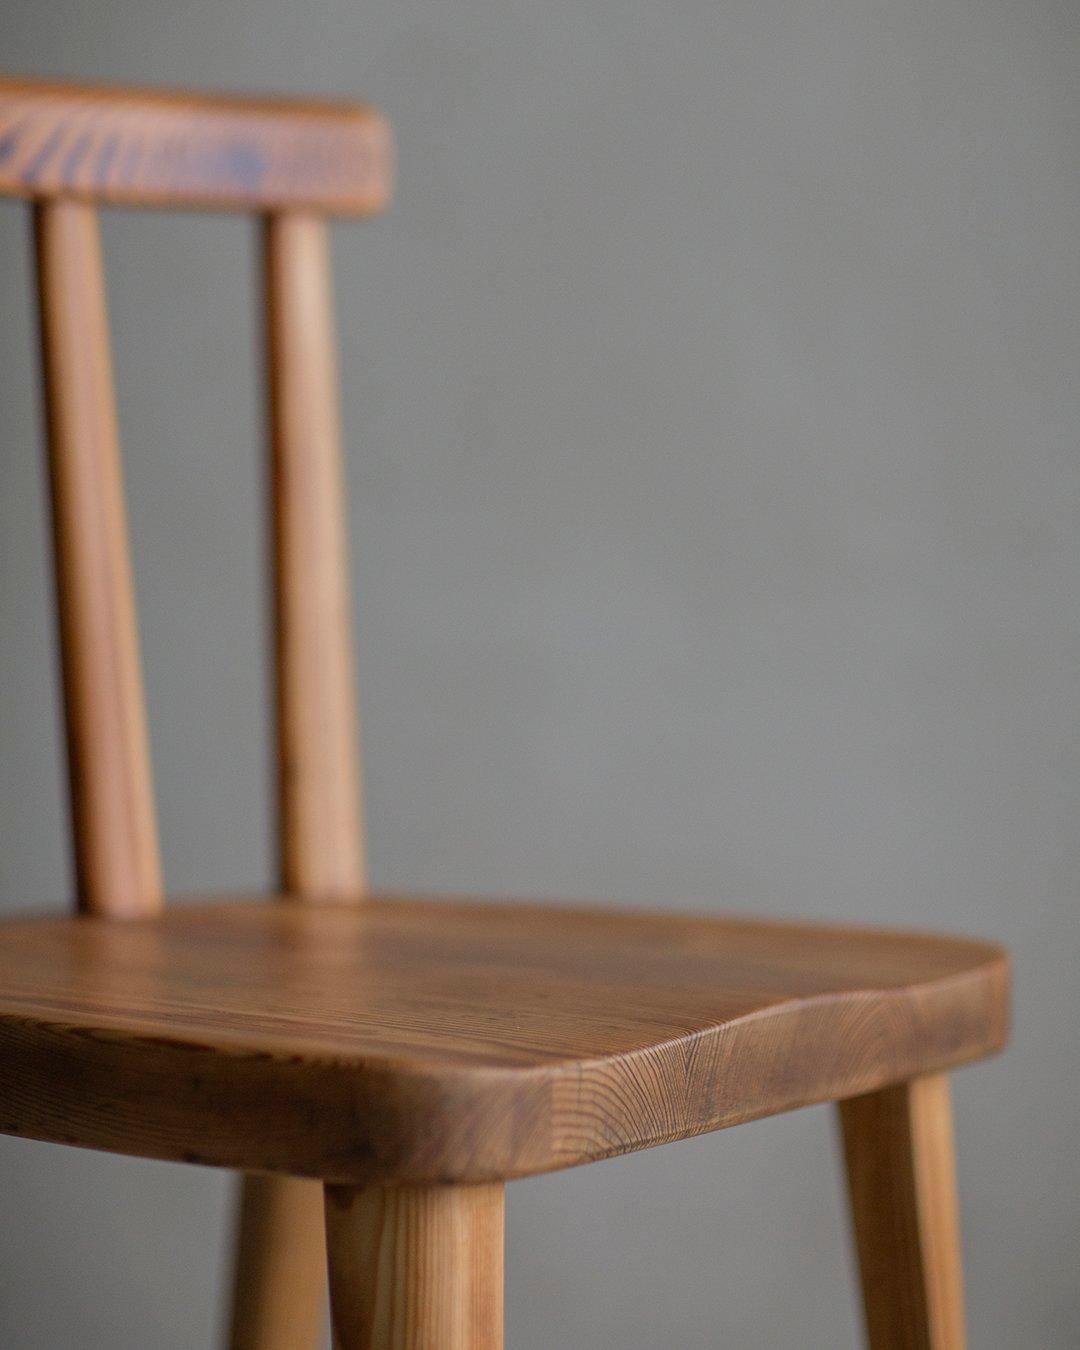 Wood Axel Einar Hjorth - Utö Dining Chair - produced by Nordiska Kompaniet in Sweden For Sale